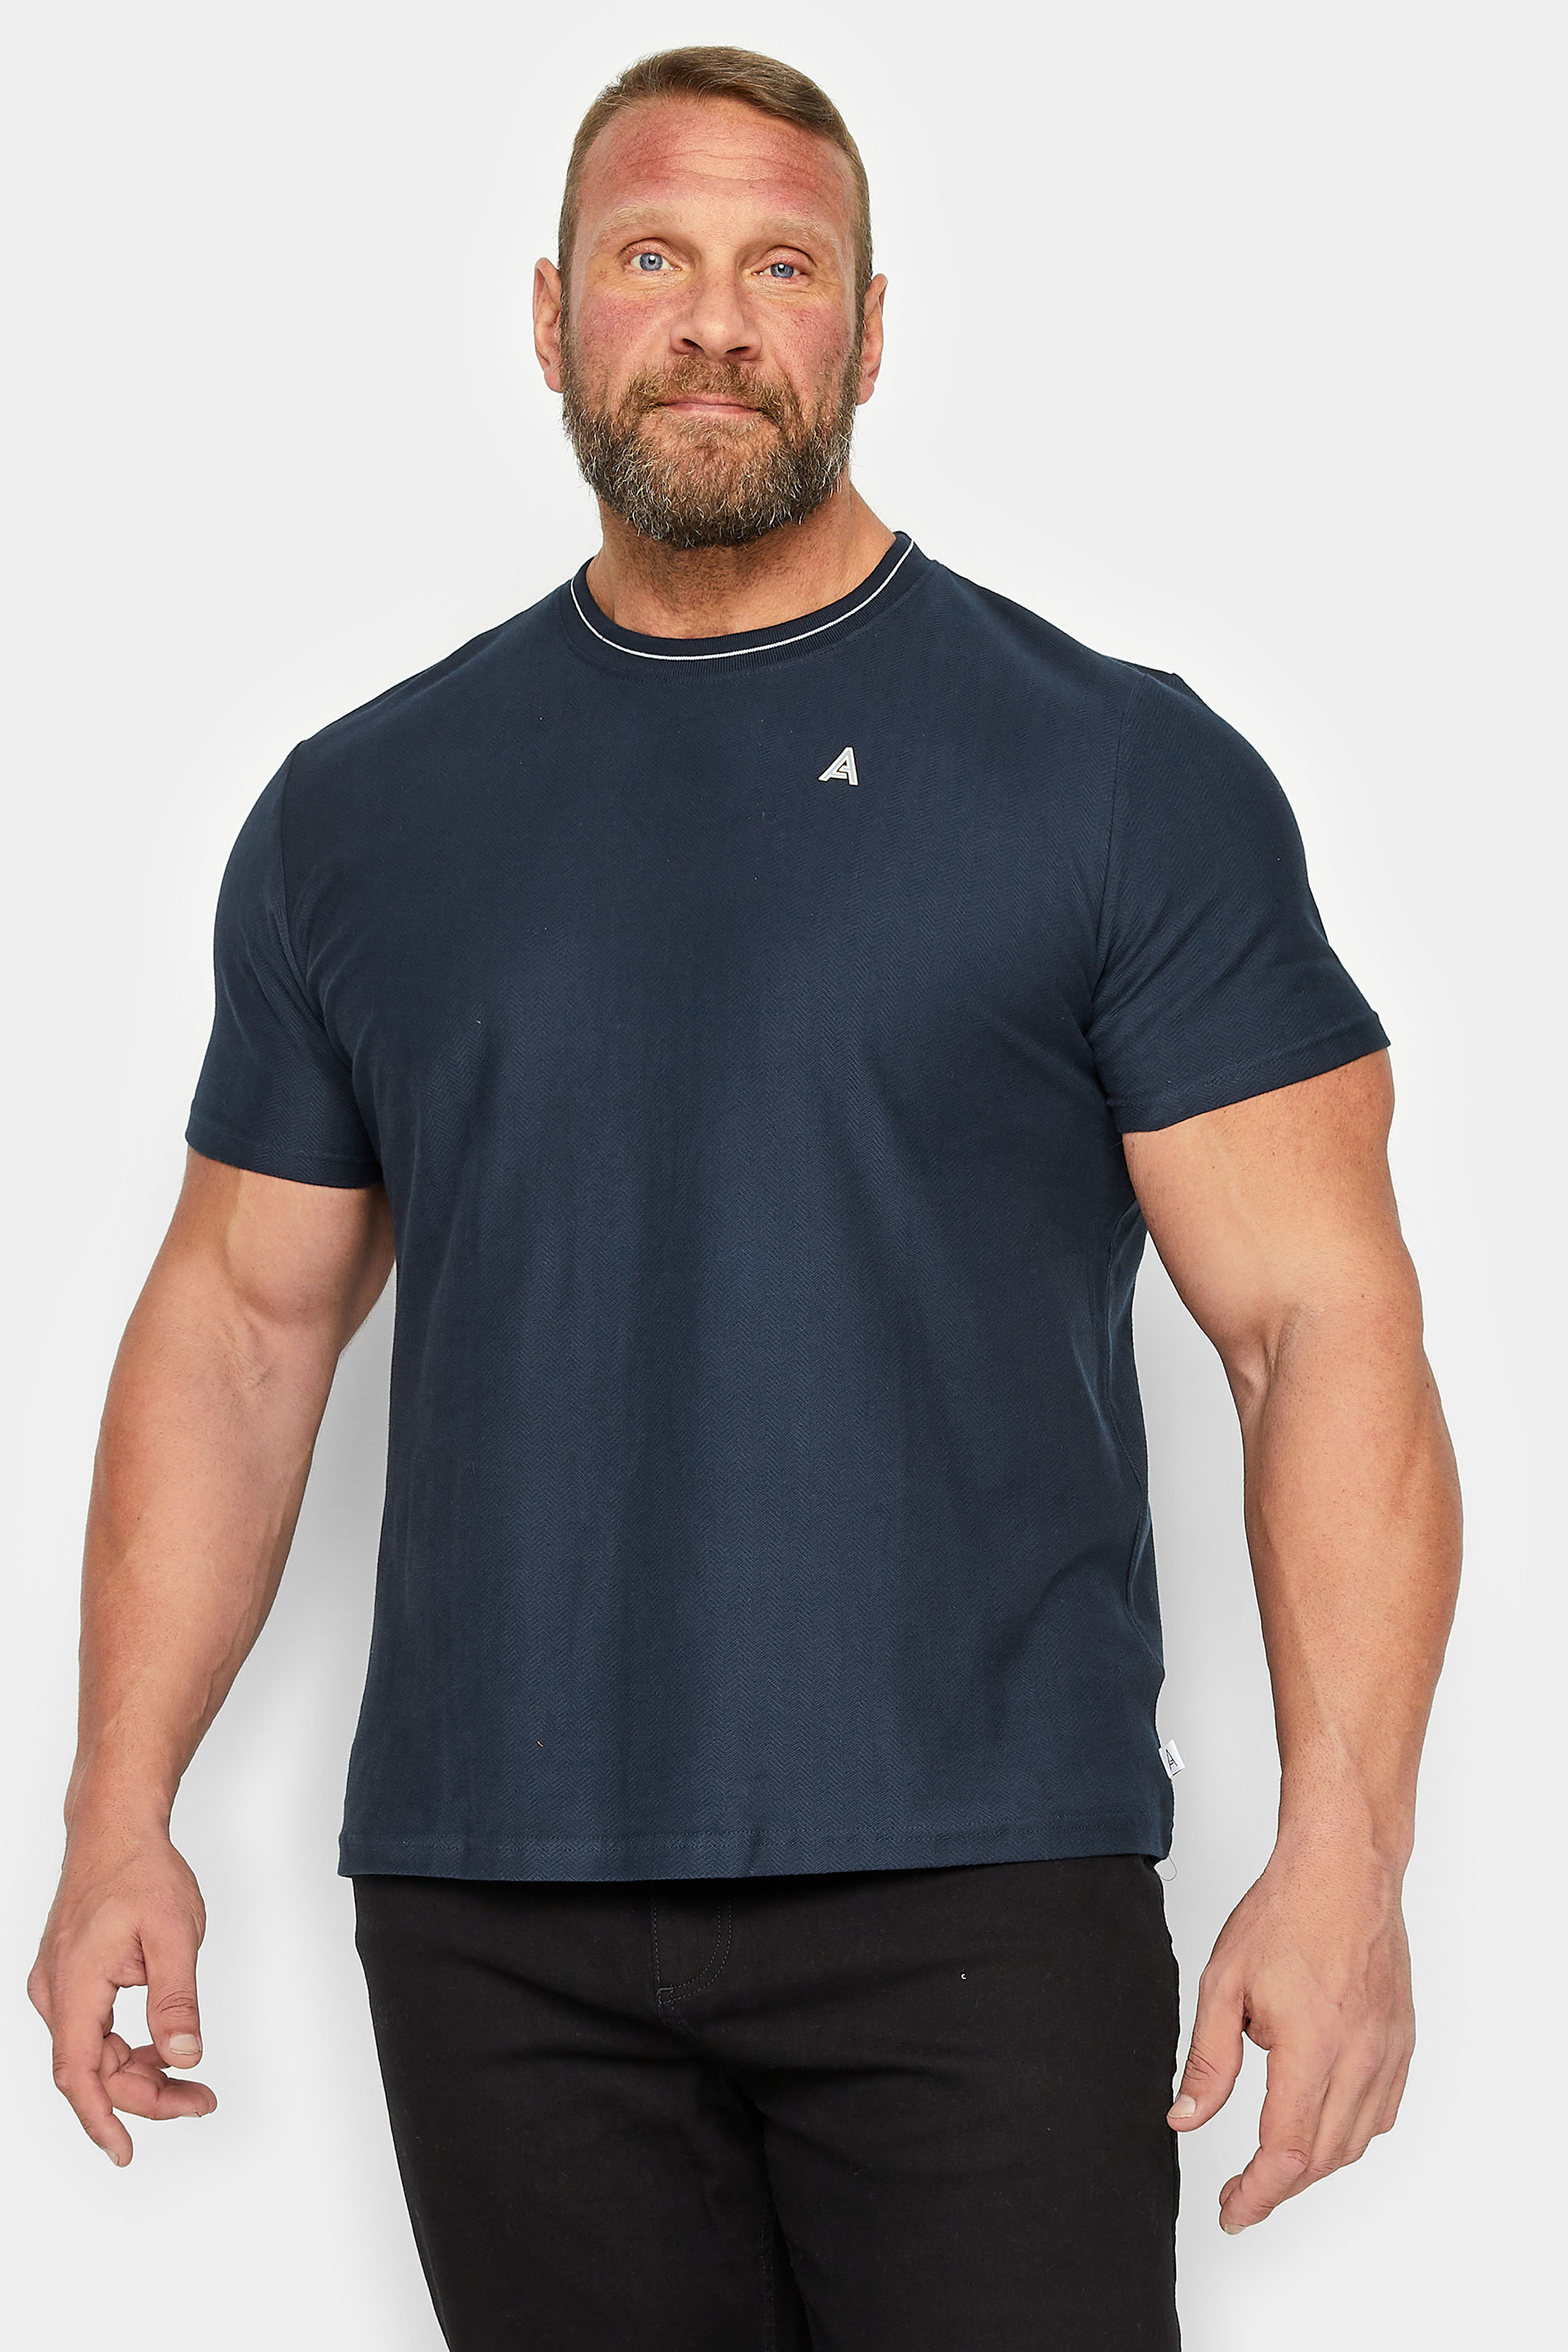 STUDIO A Big & Tall Navy Blue T-Shirt | BadRhino 1